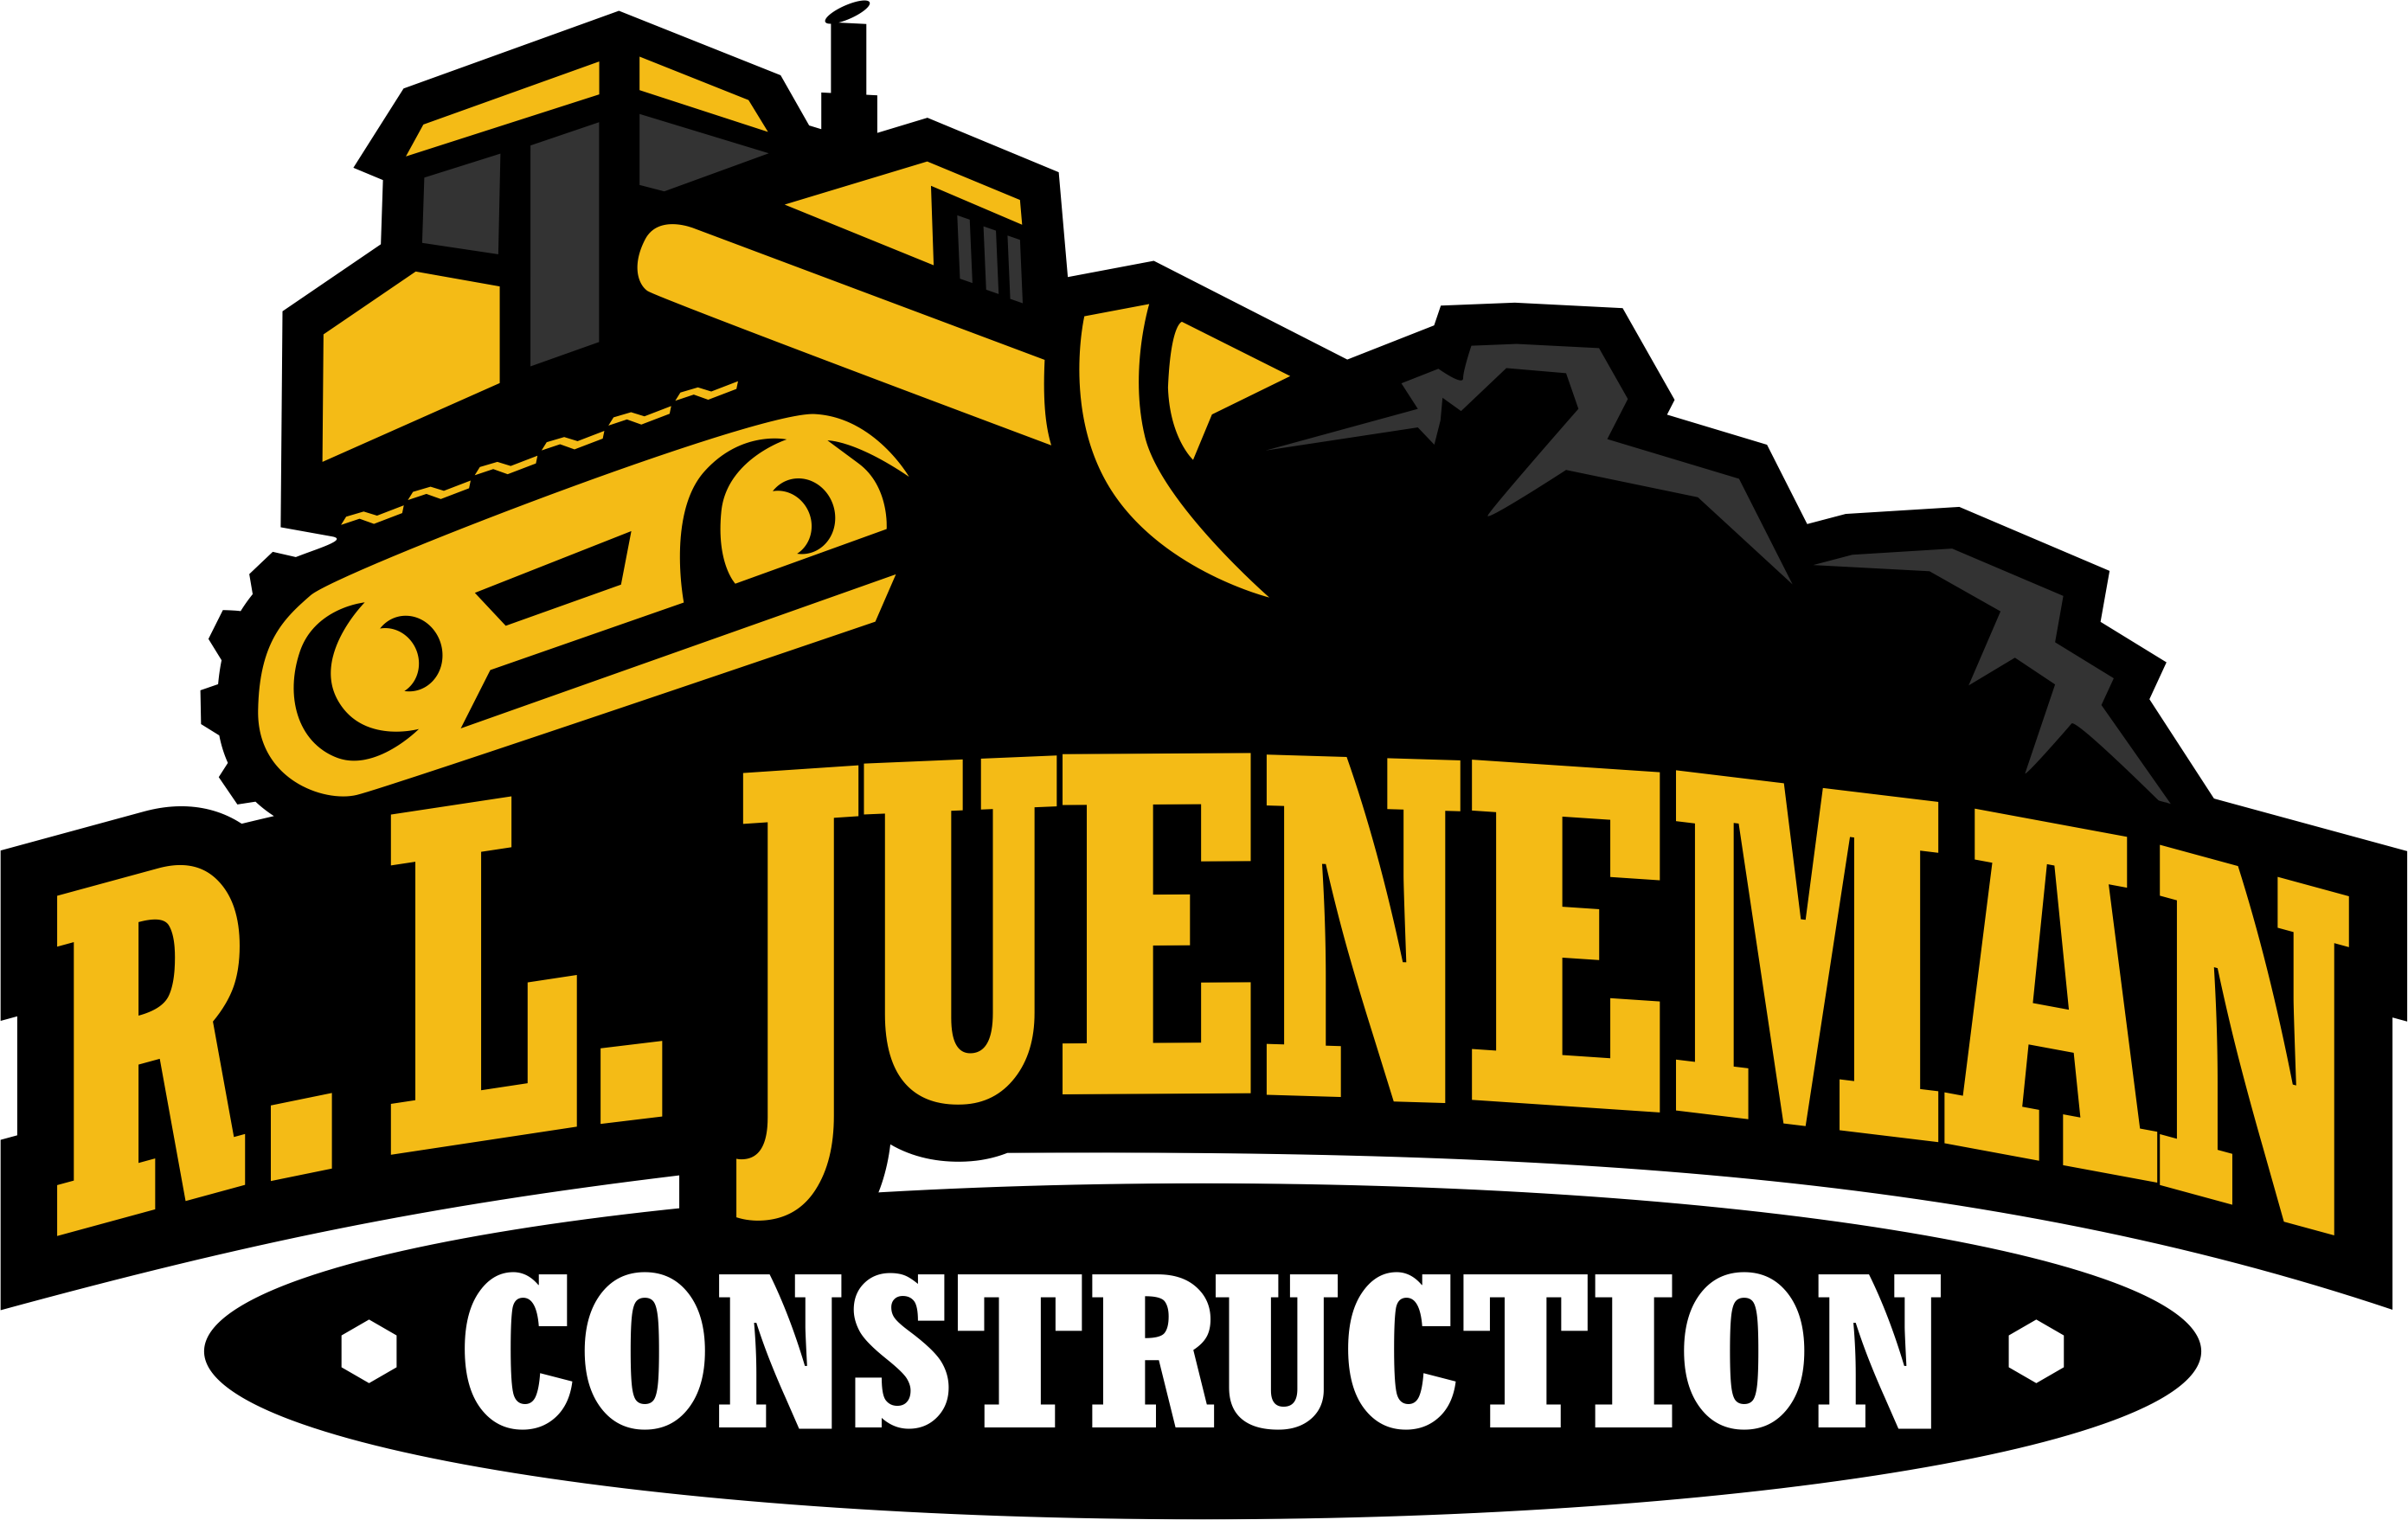 Jueneman Construction - Construction (2783x1757)